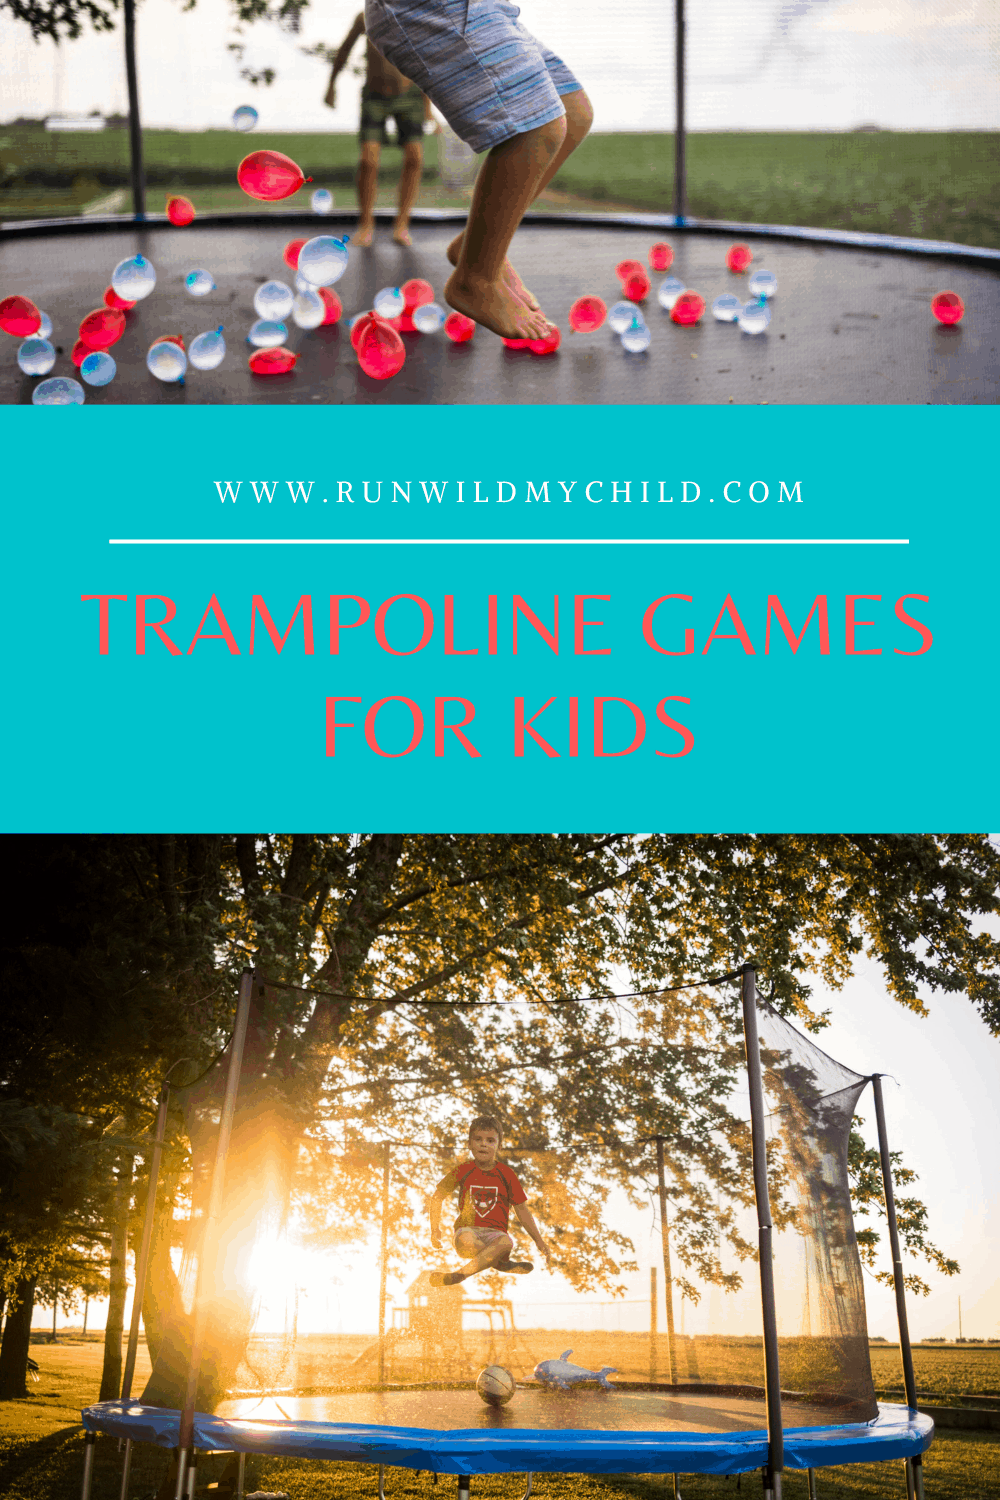 Trampoline games for kids